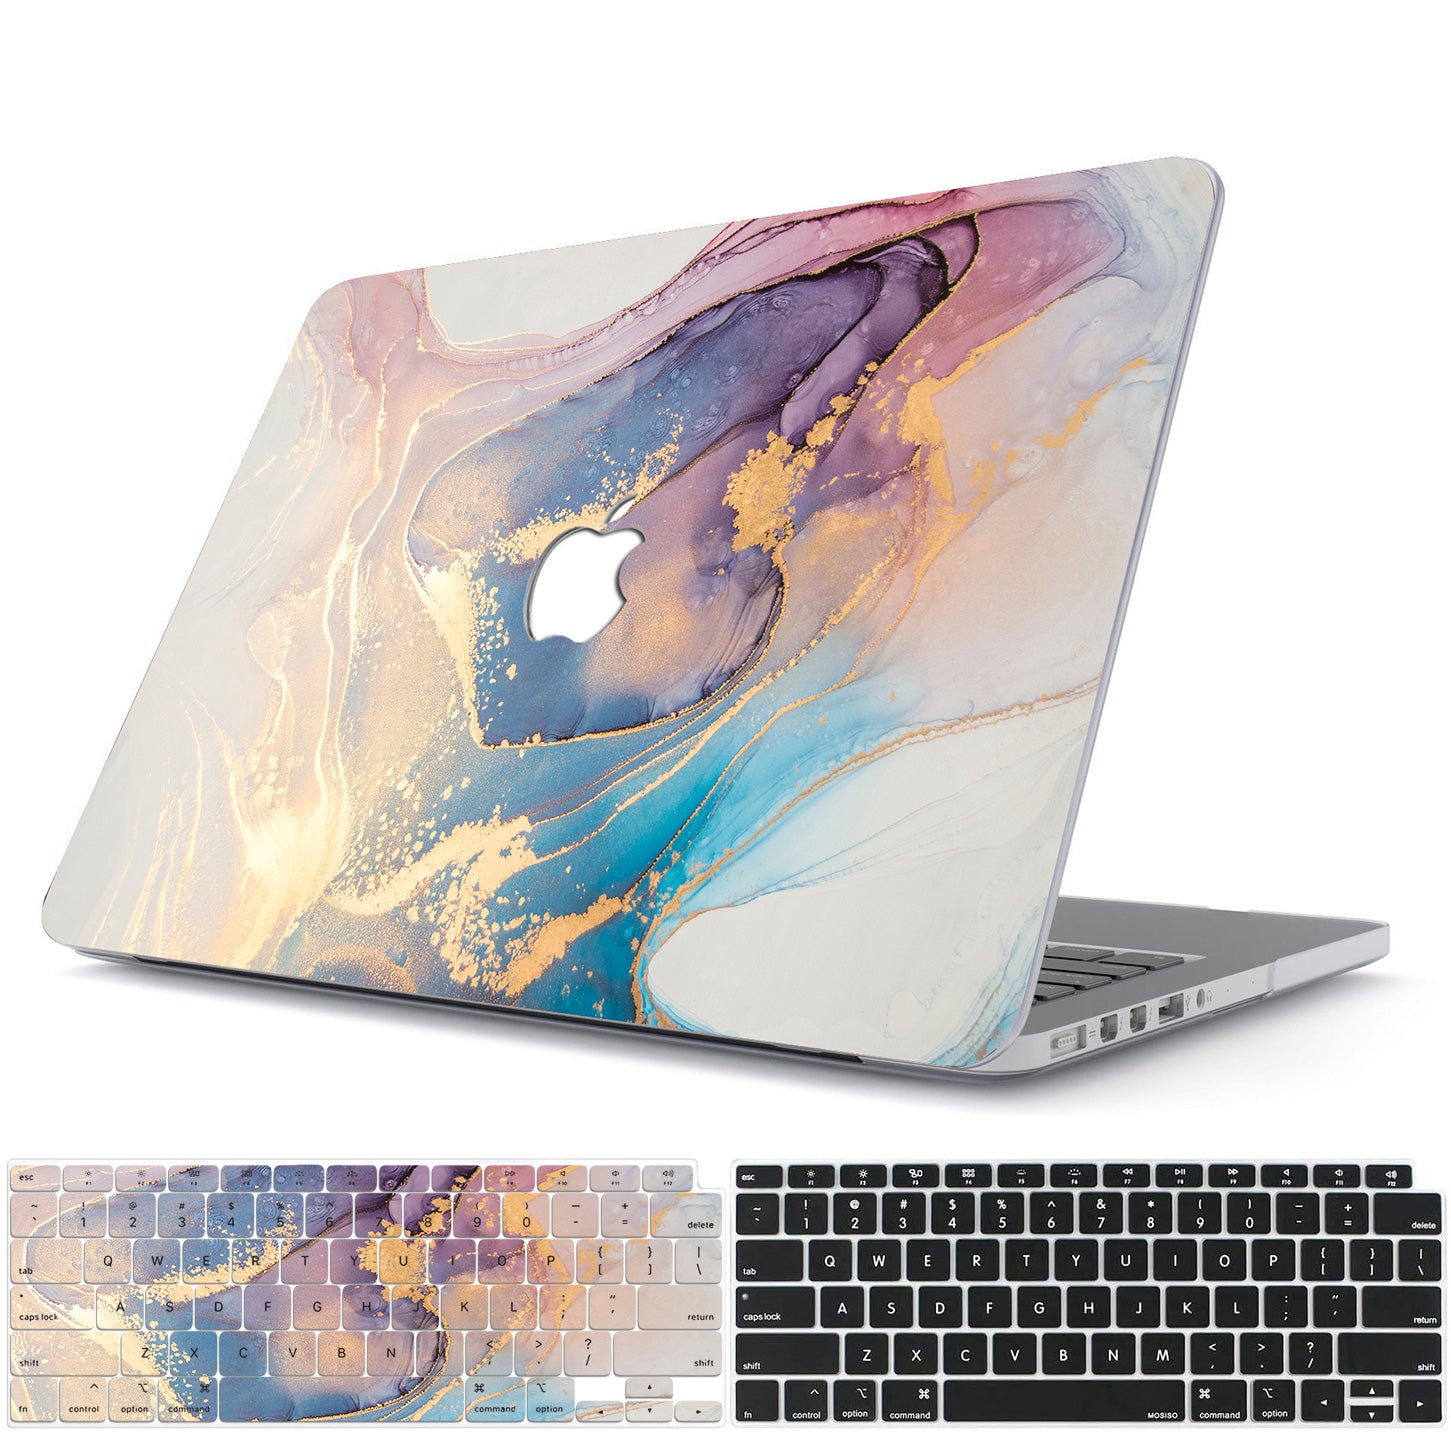 Gorgeous Macbook case